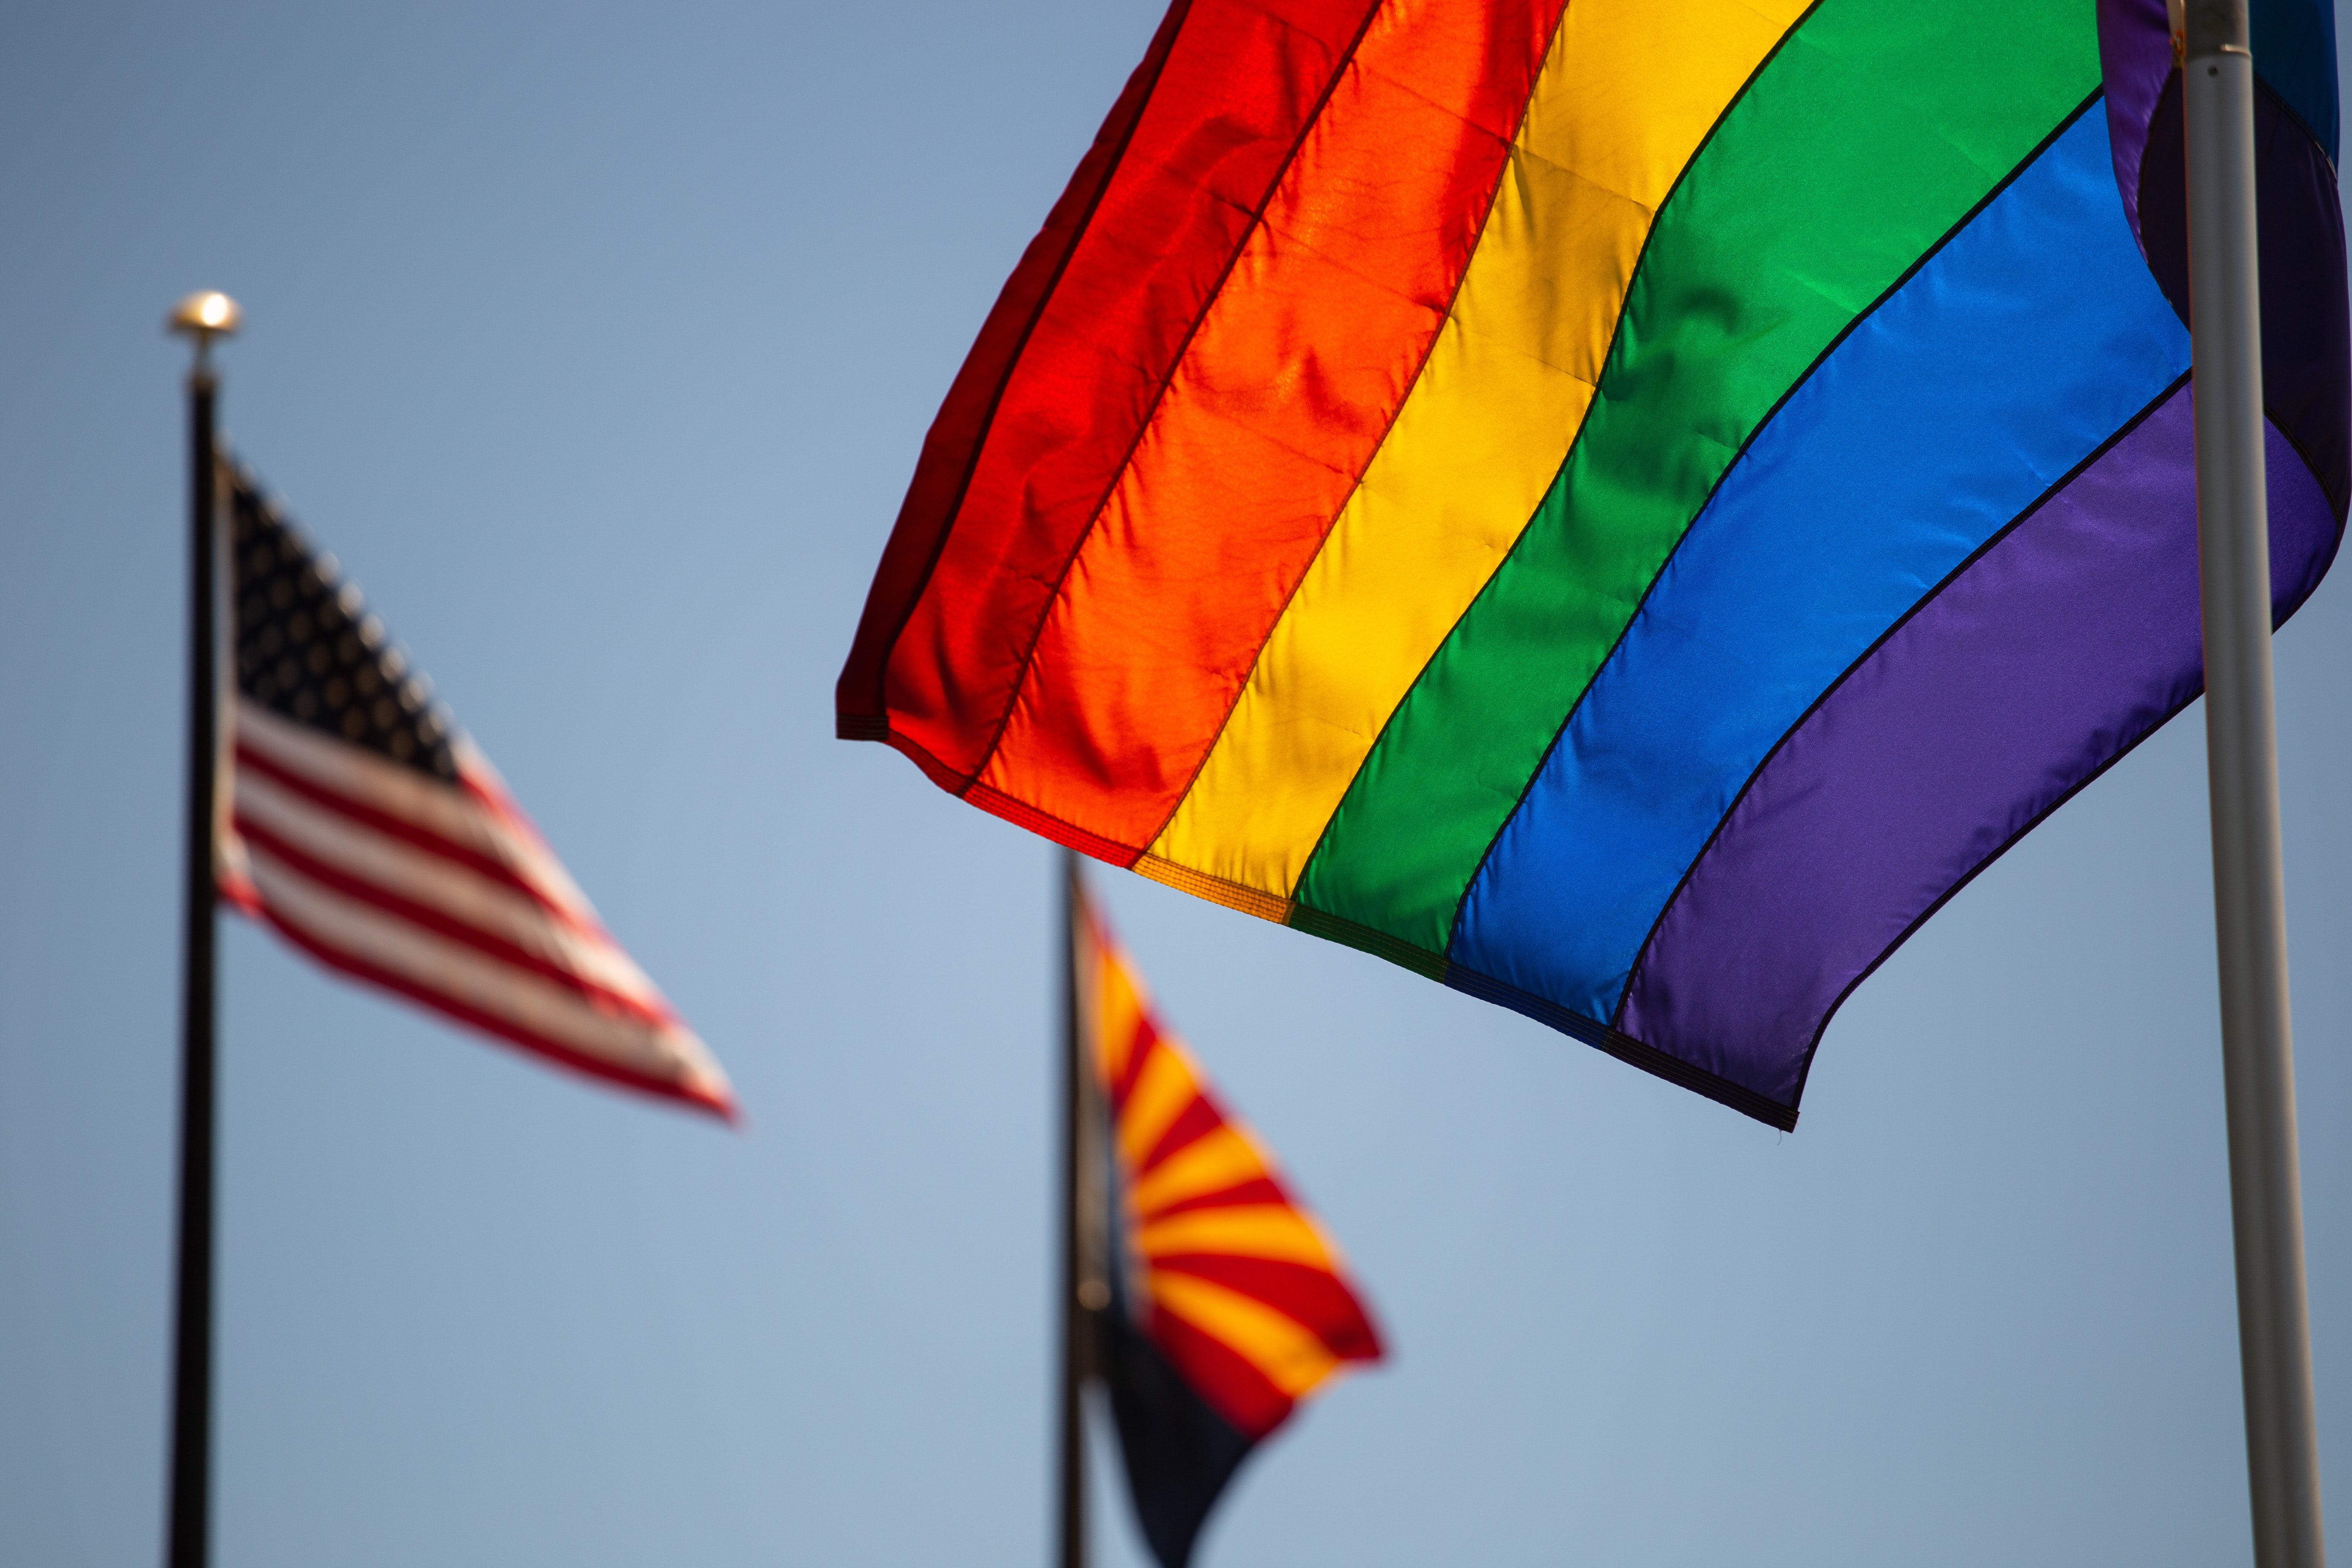 Arizona state flag alongside pride flag